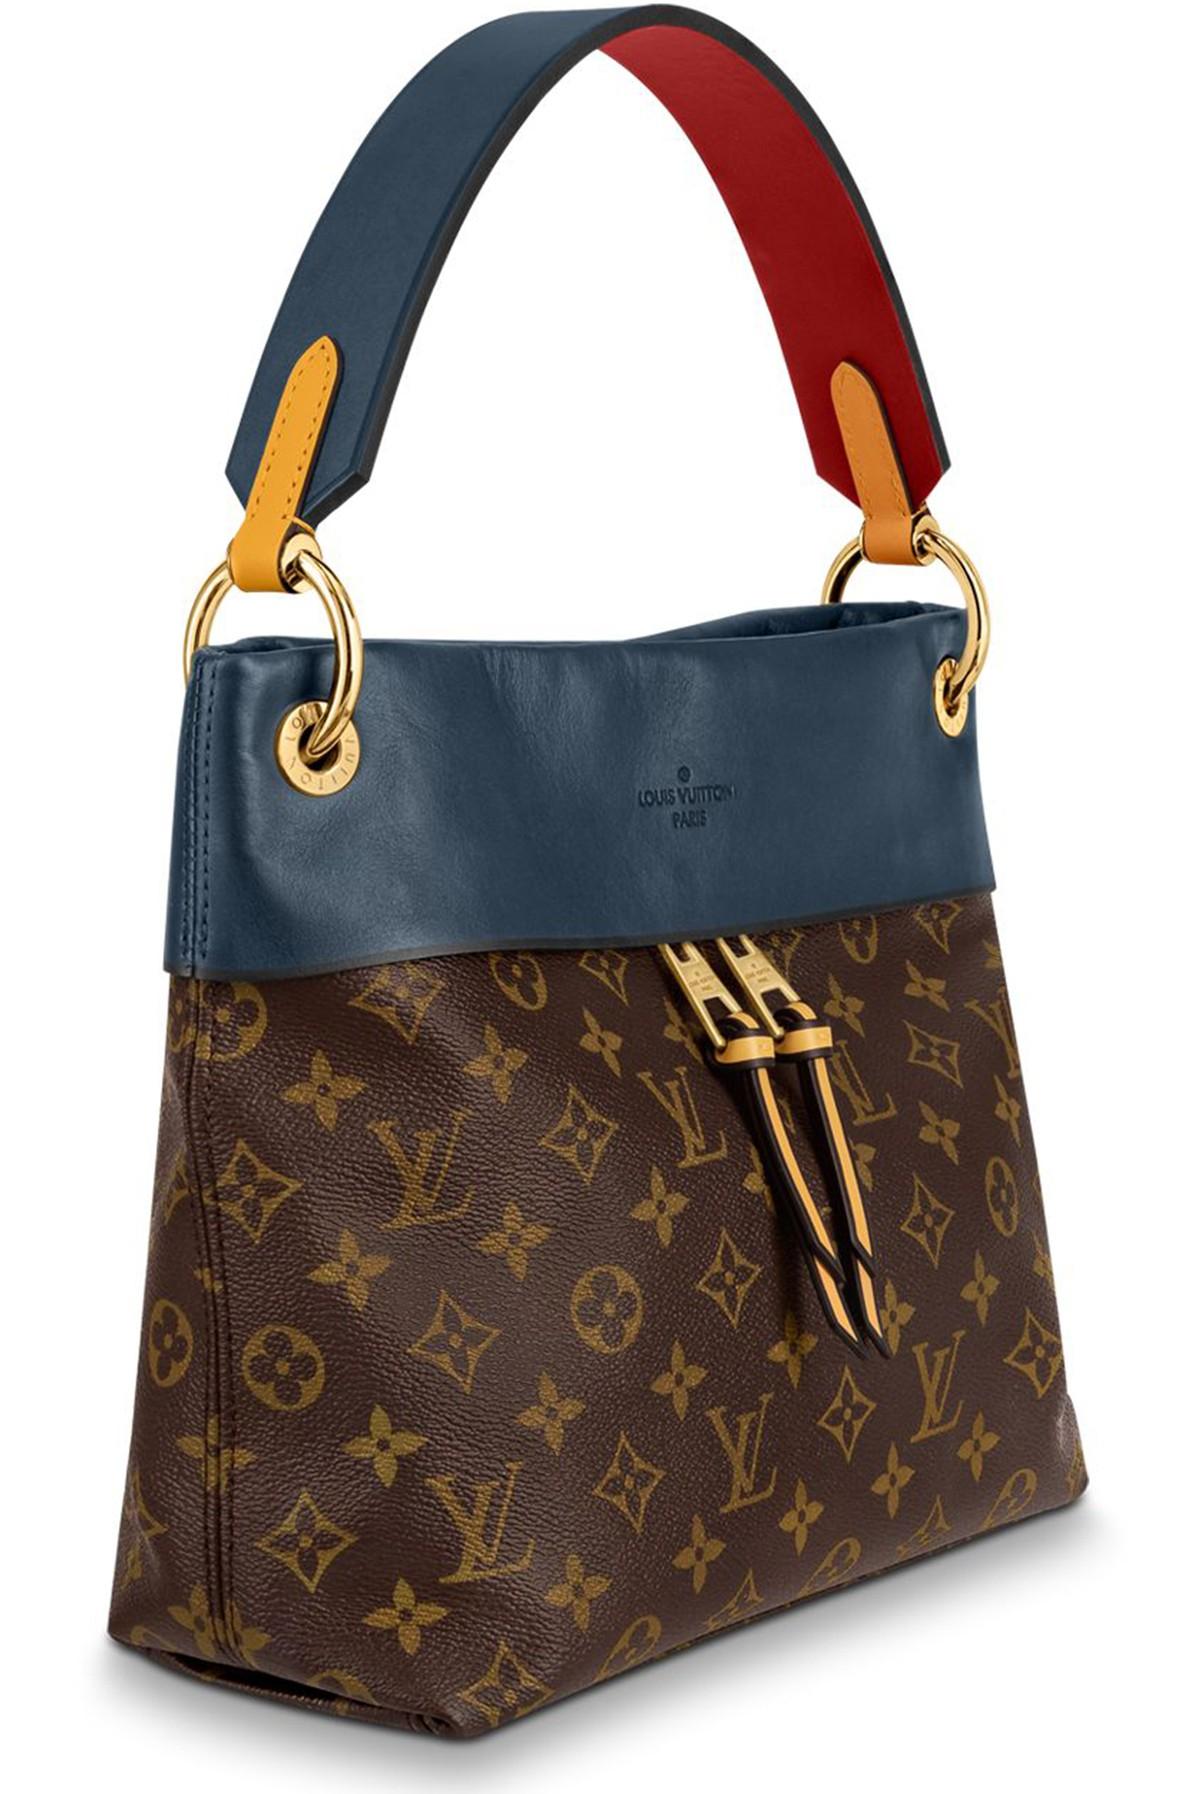 Louis Vuitton Tuileries - Luxe Bag Rental